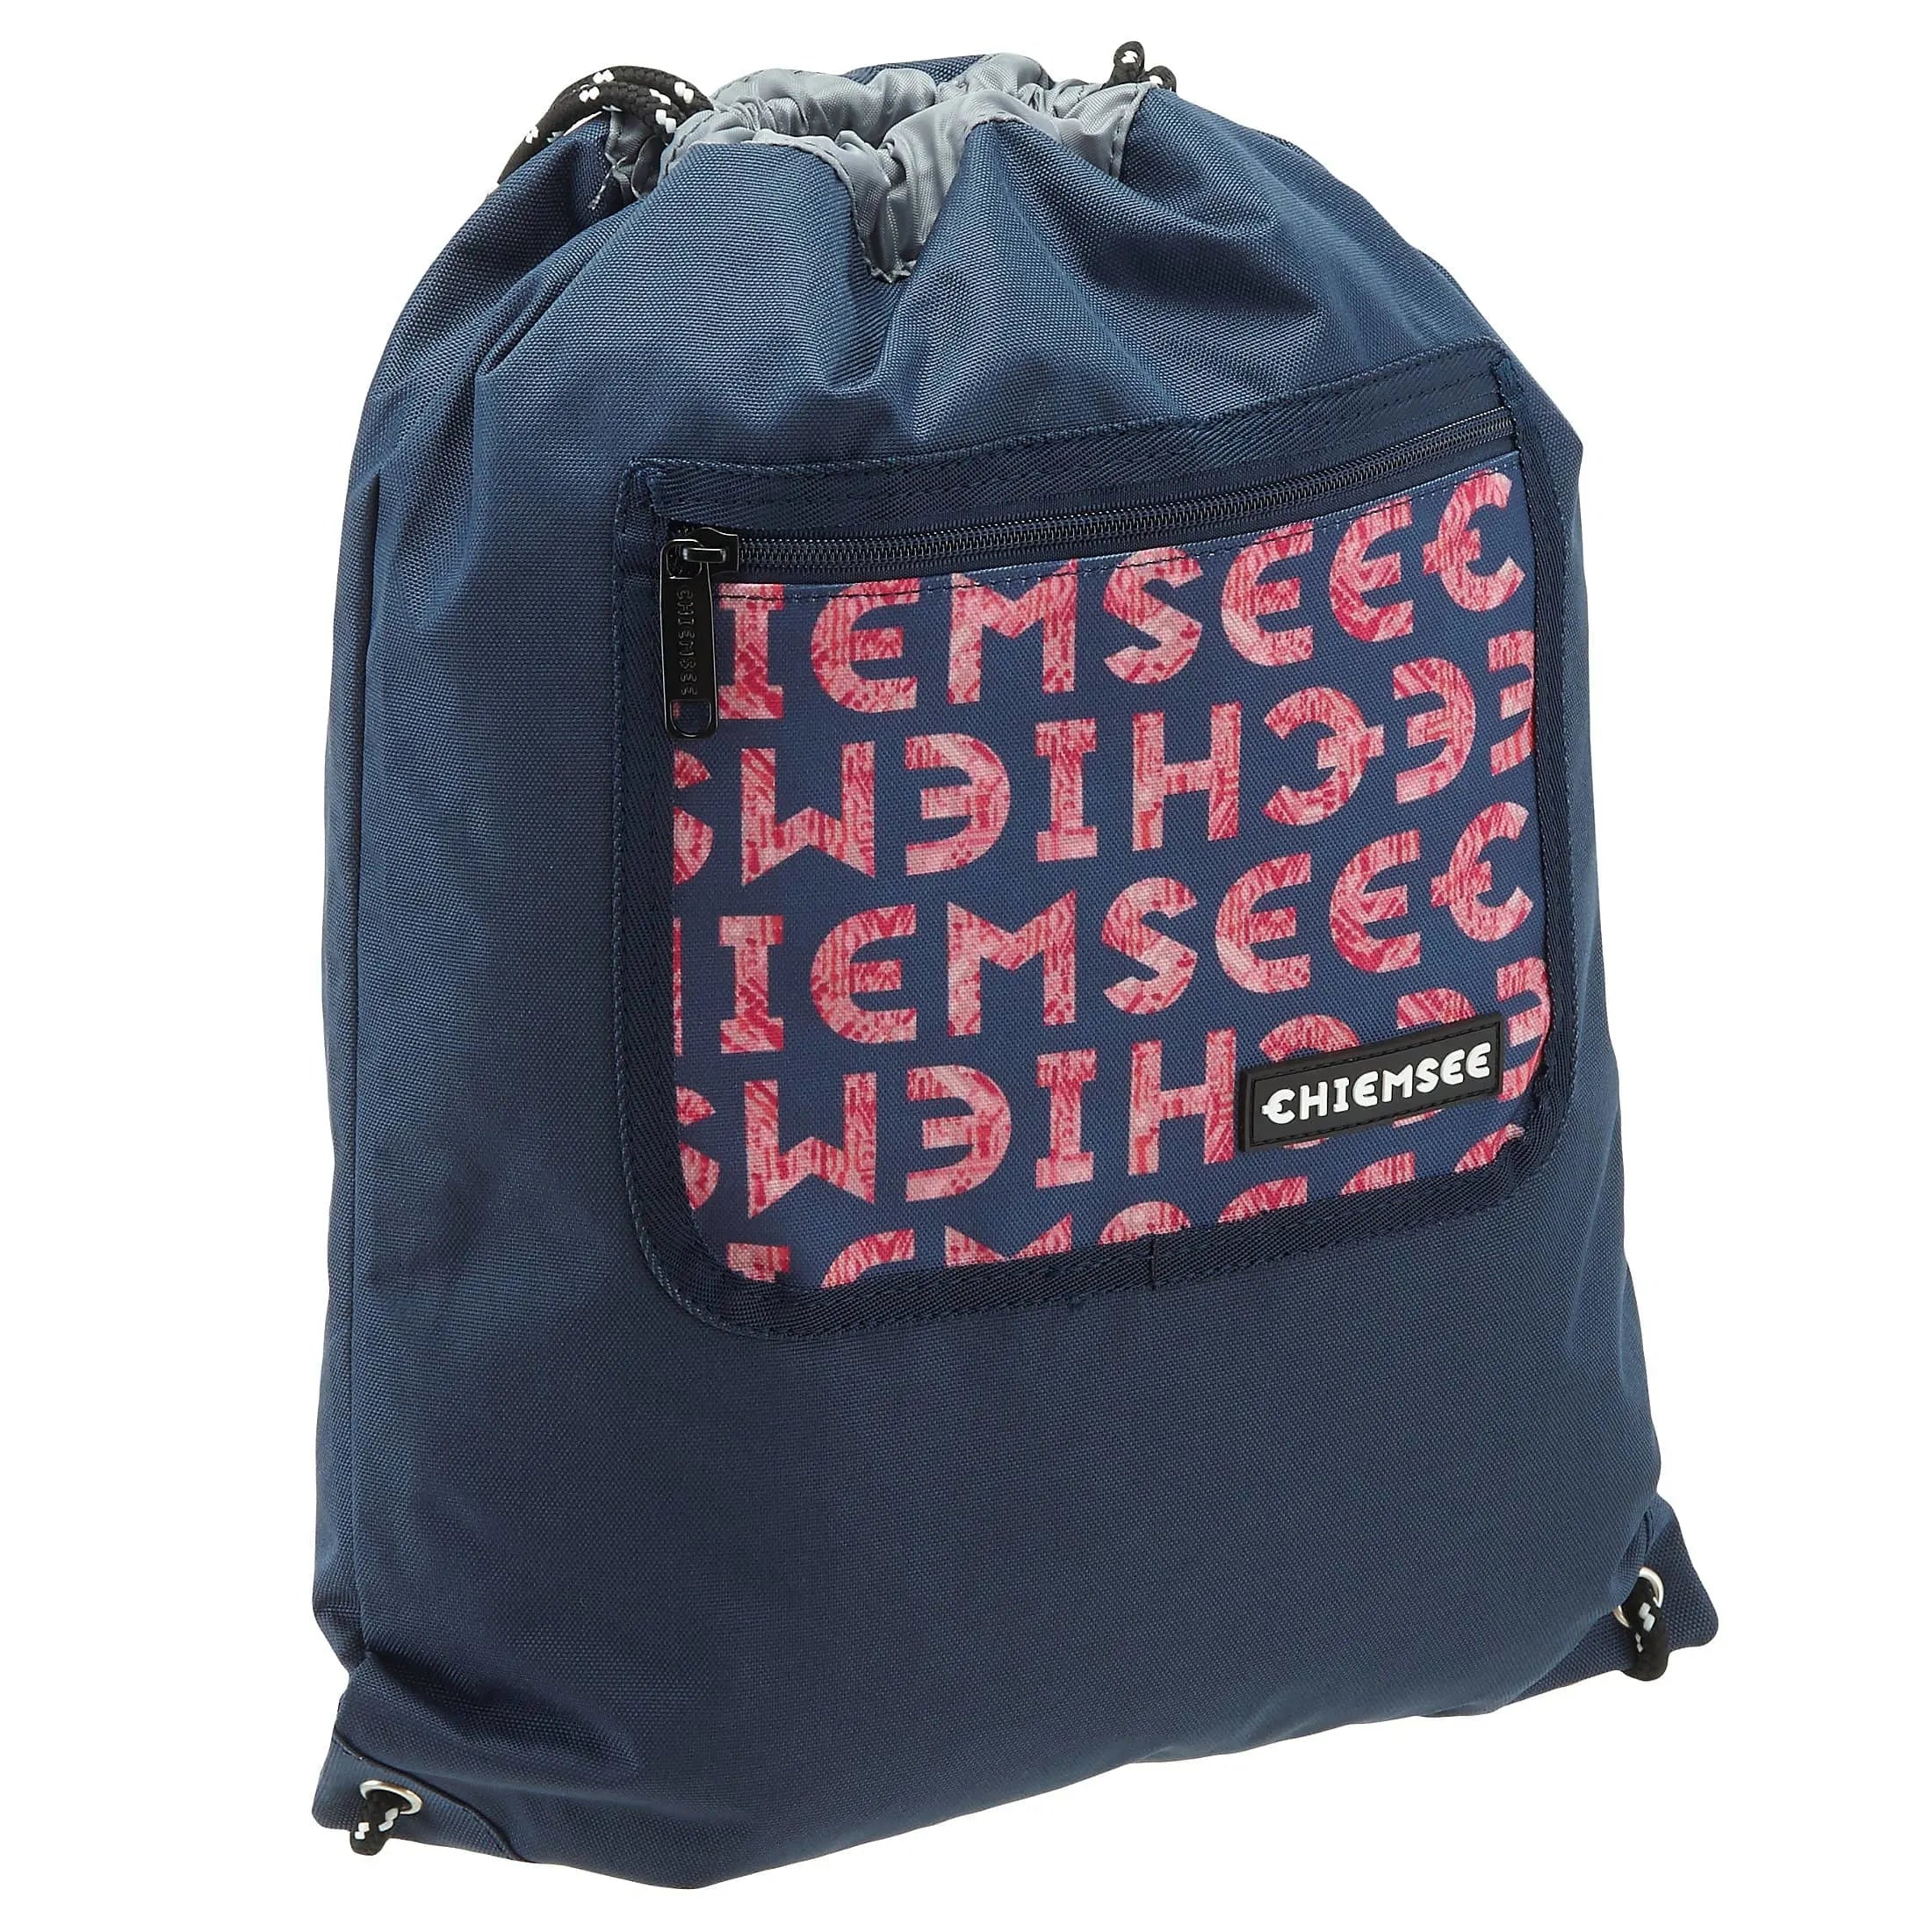 Chiemsee Sports & Travel Bags Drawstring sports bag 45 cm - dark blue-pink